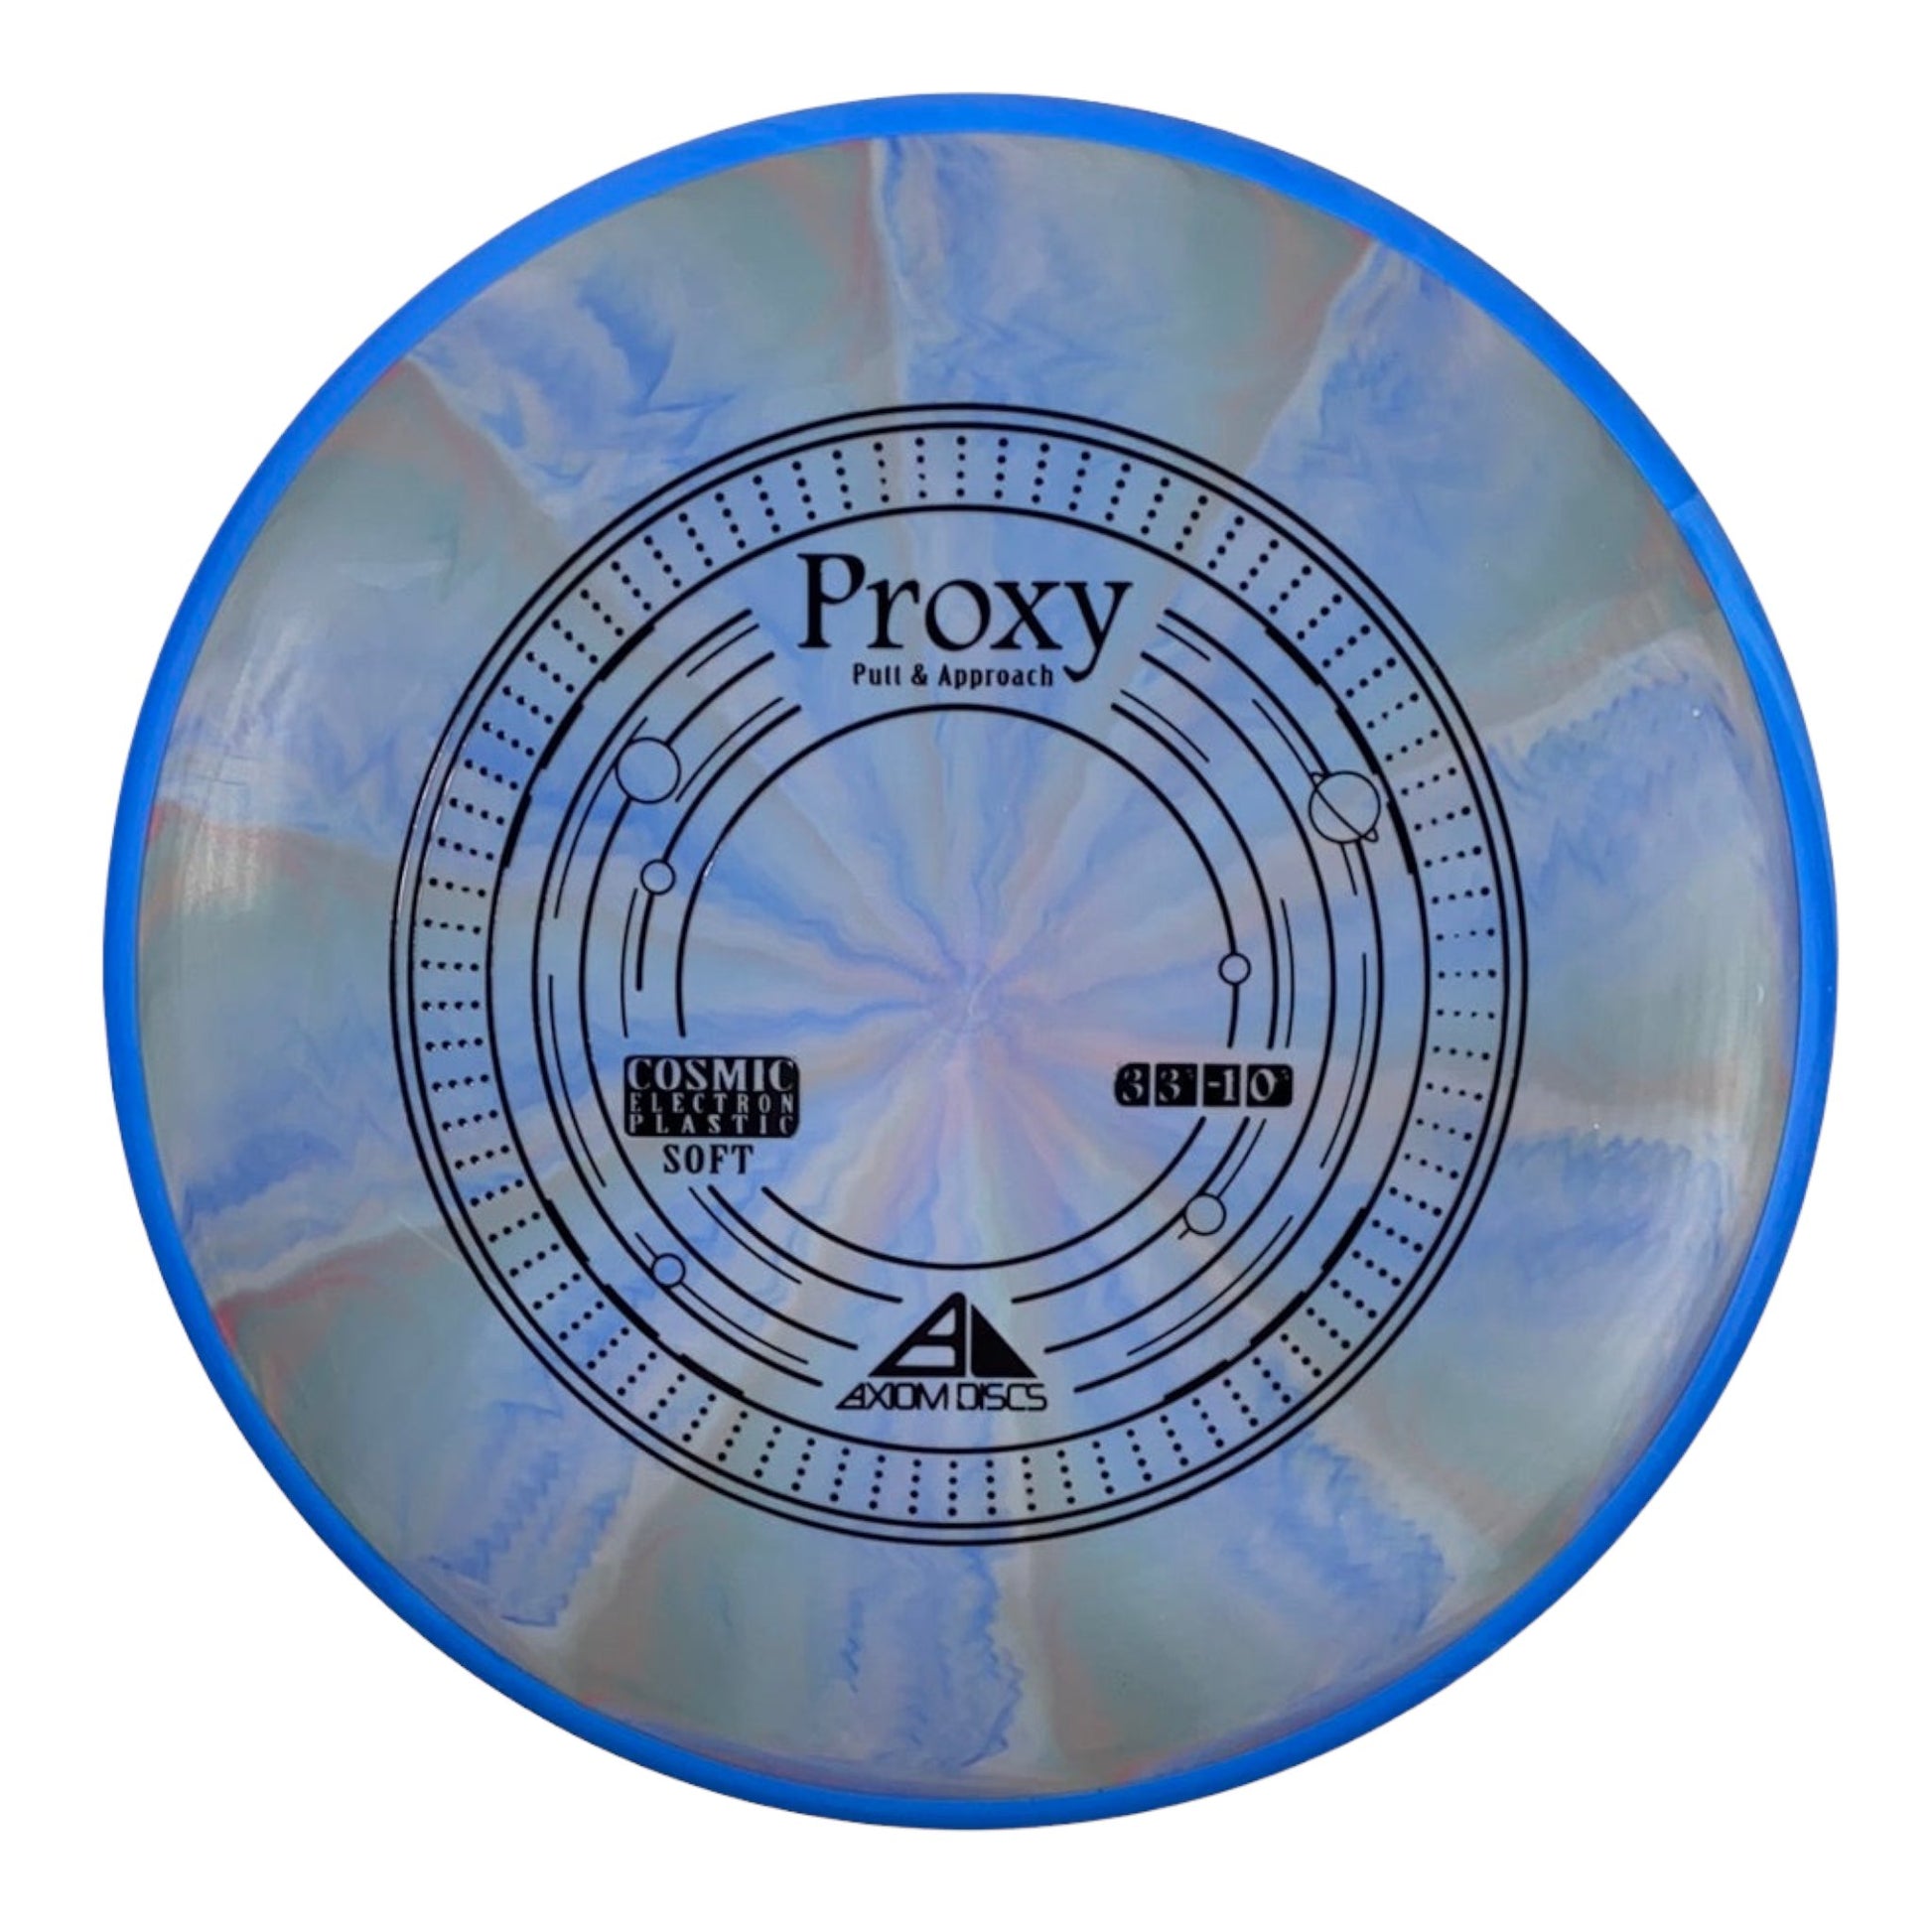 Axiom Discs Proxy | Cosmic Electron Soft | Blue/Blue 173g Disc Golf